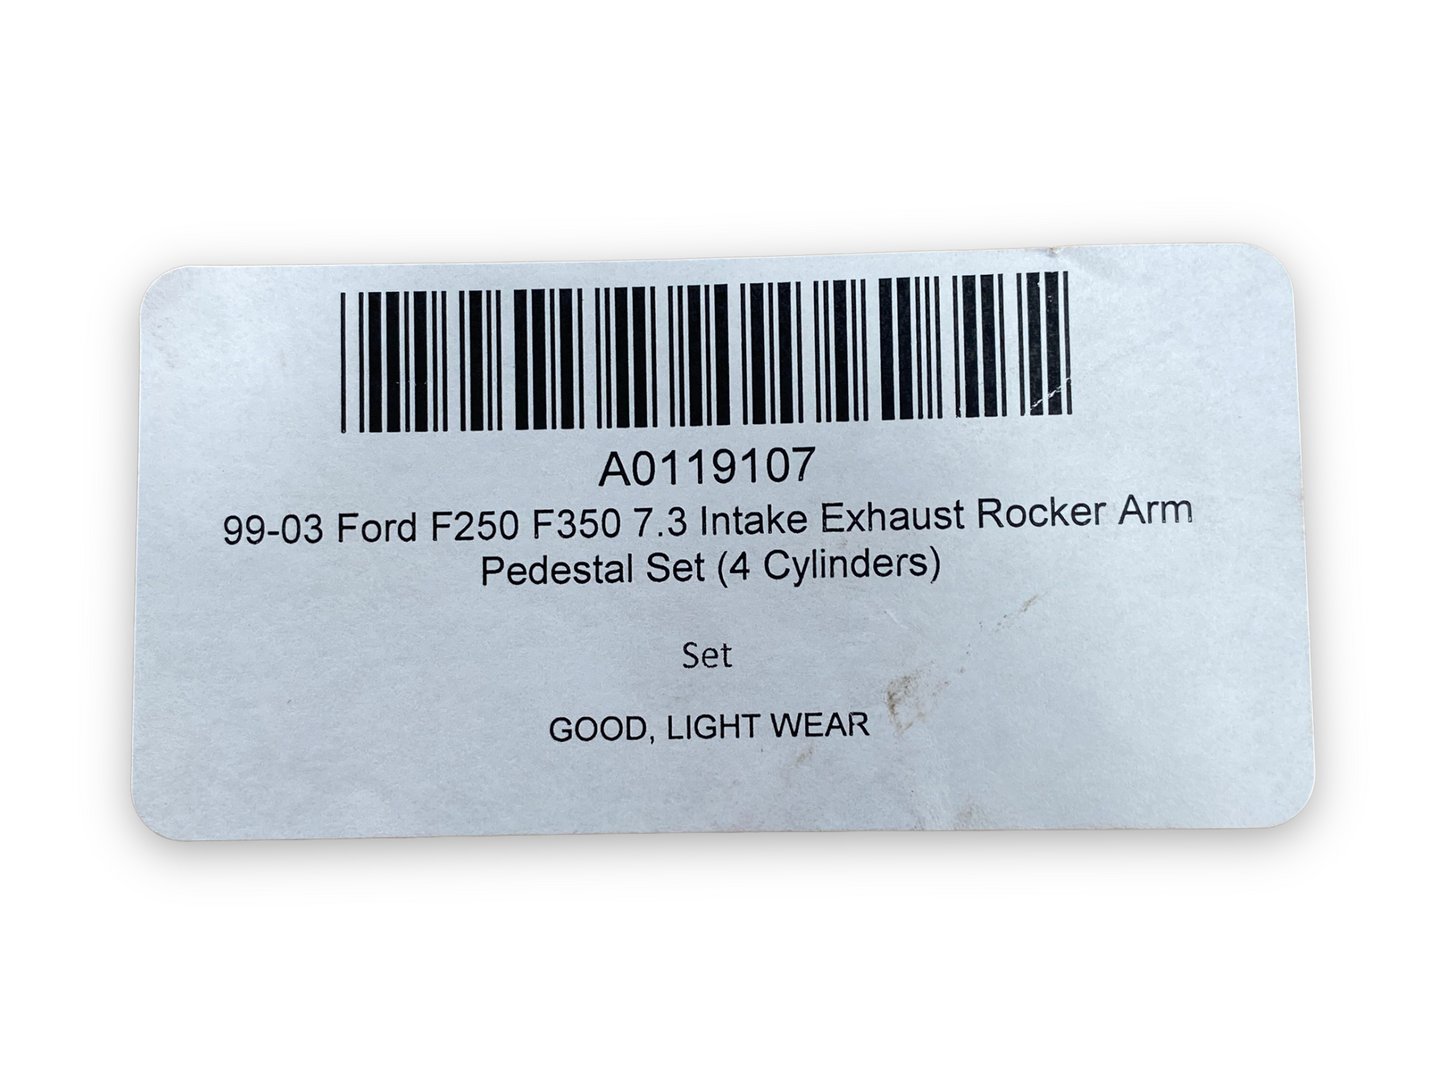 99-03 Ford F250 F350 7.3 Intake Exhaust Rocker Arm Pedestal Set (4 Cylinders)